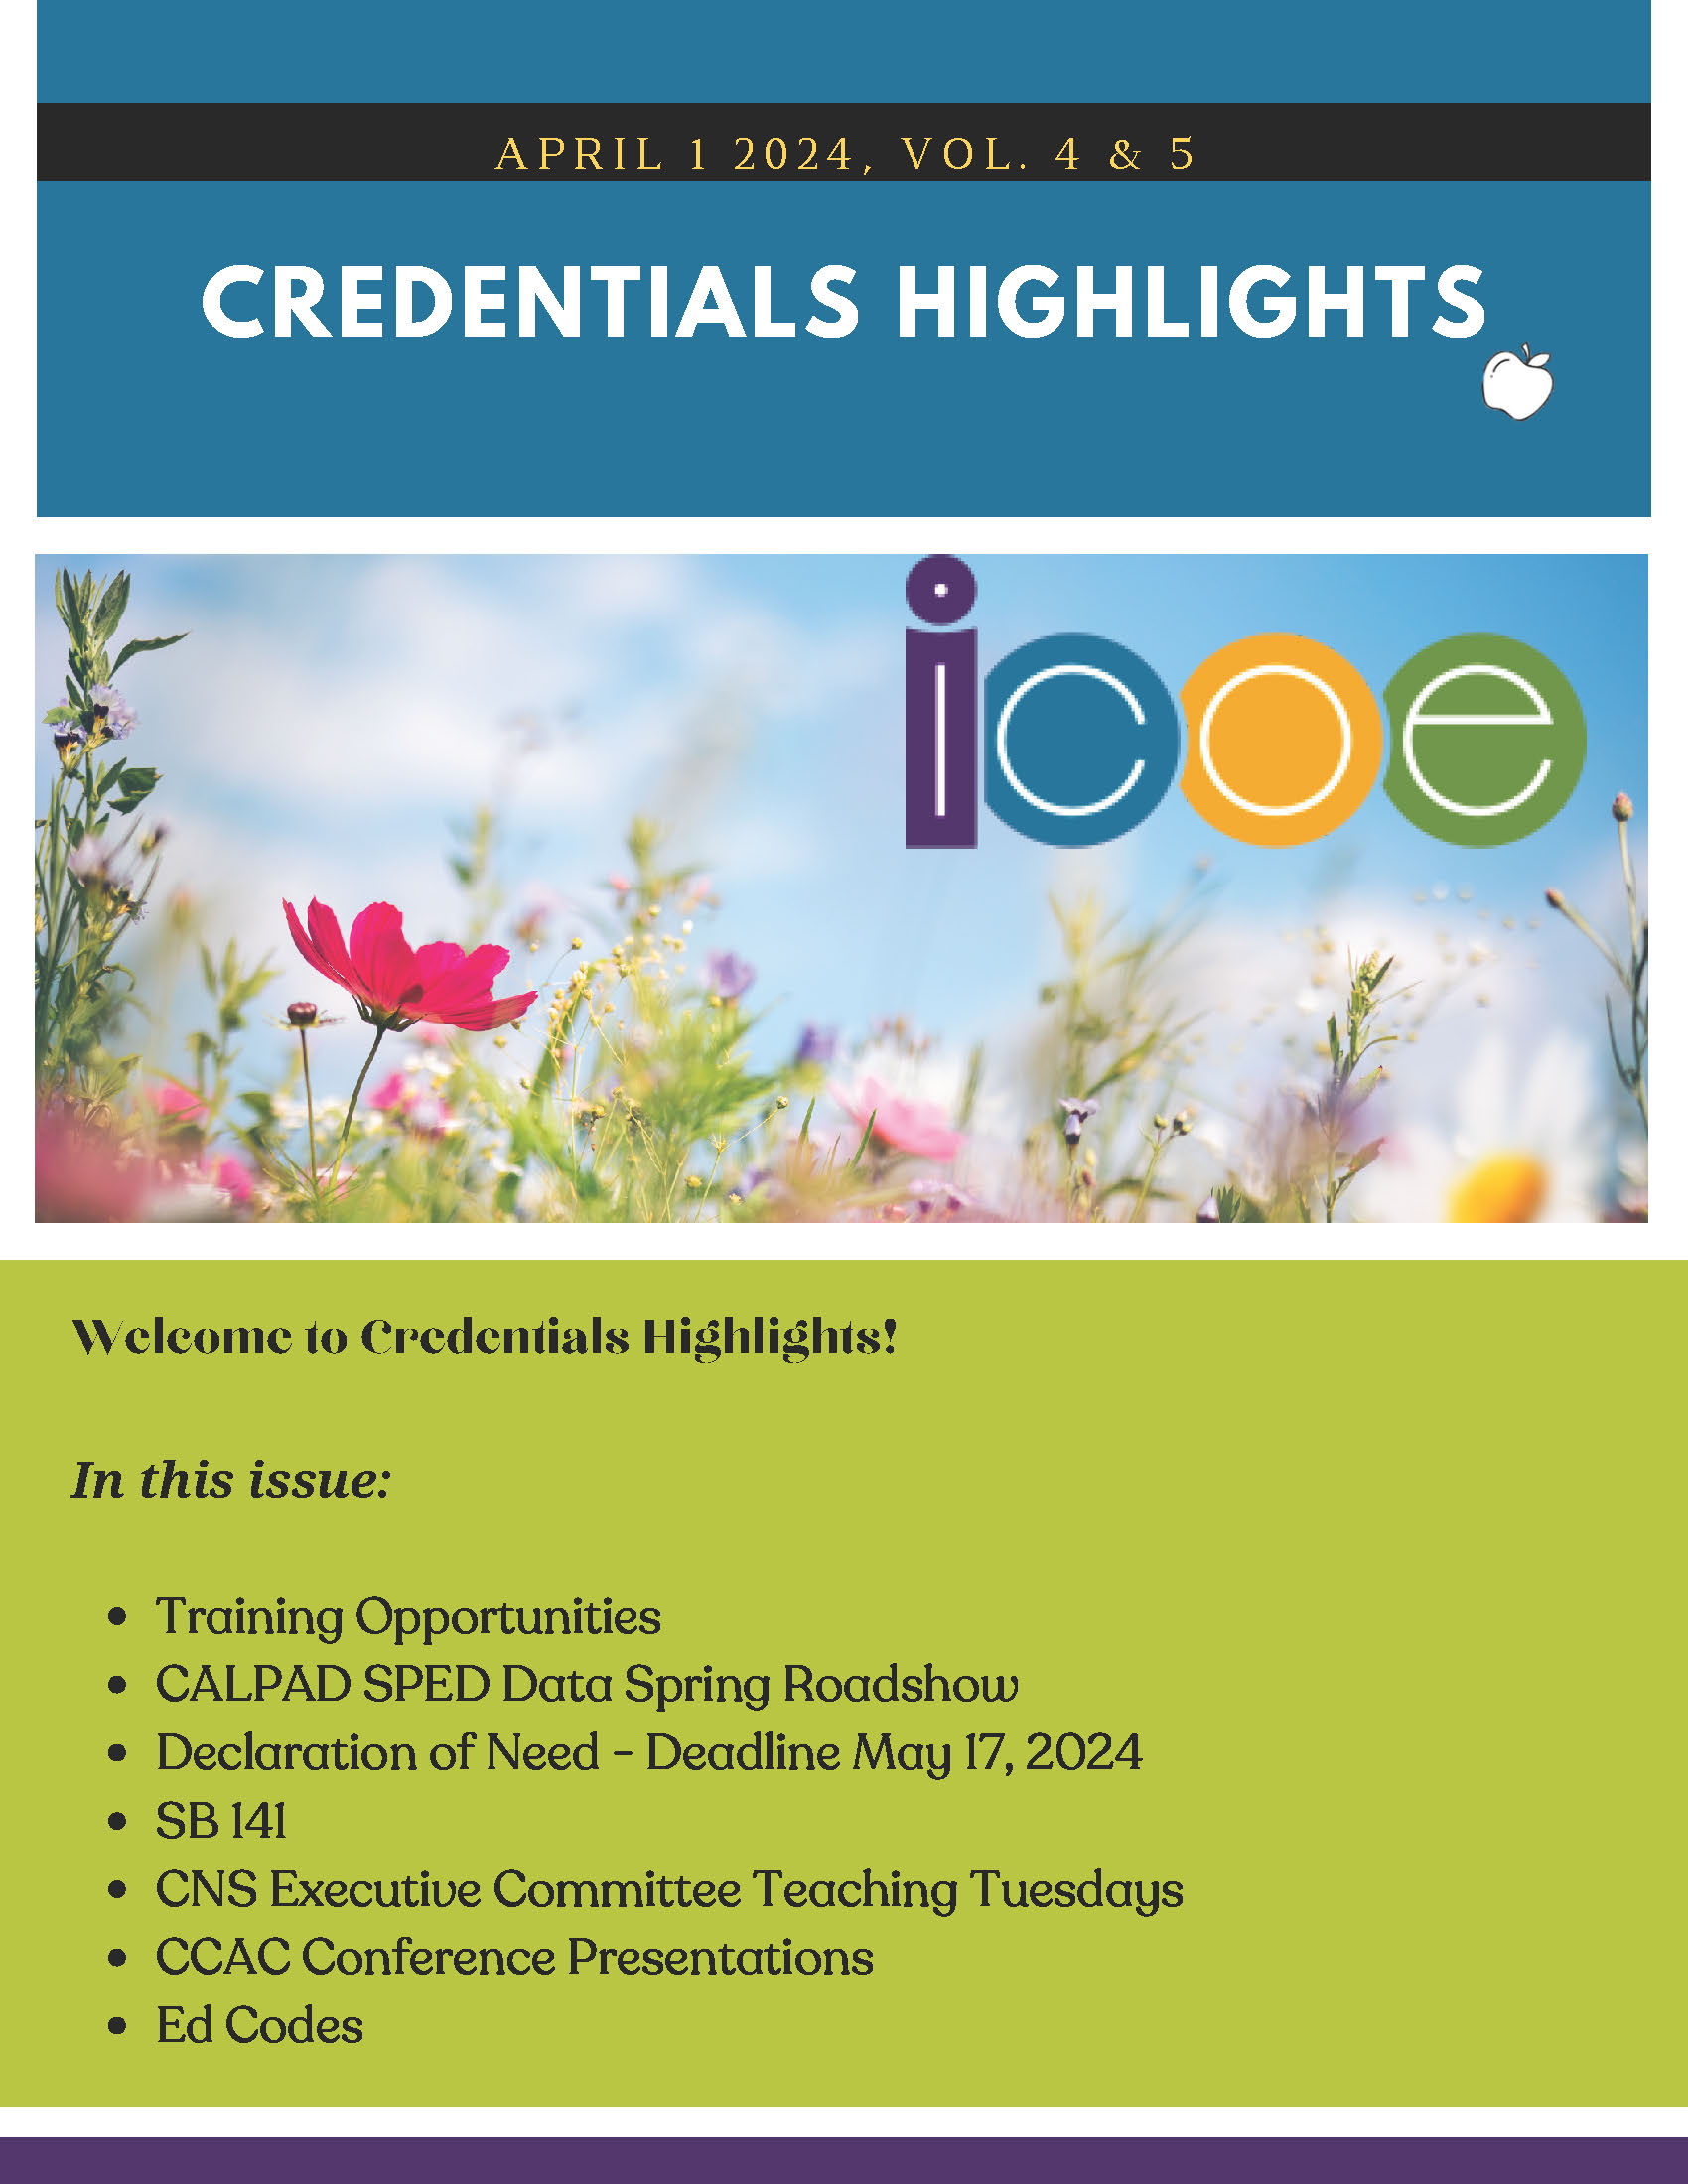 Credentials Highlights, Volume 4 & 5 – April 2024